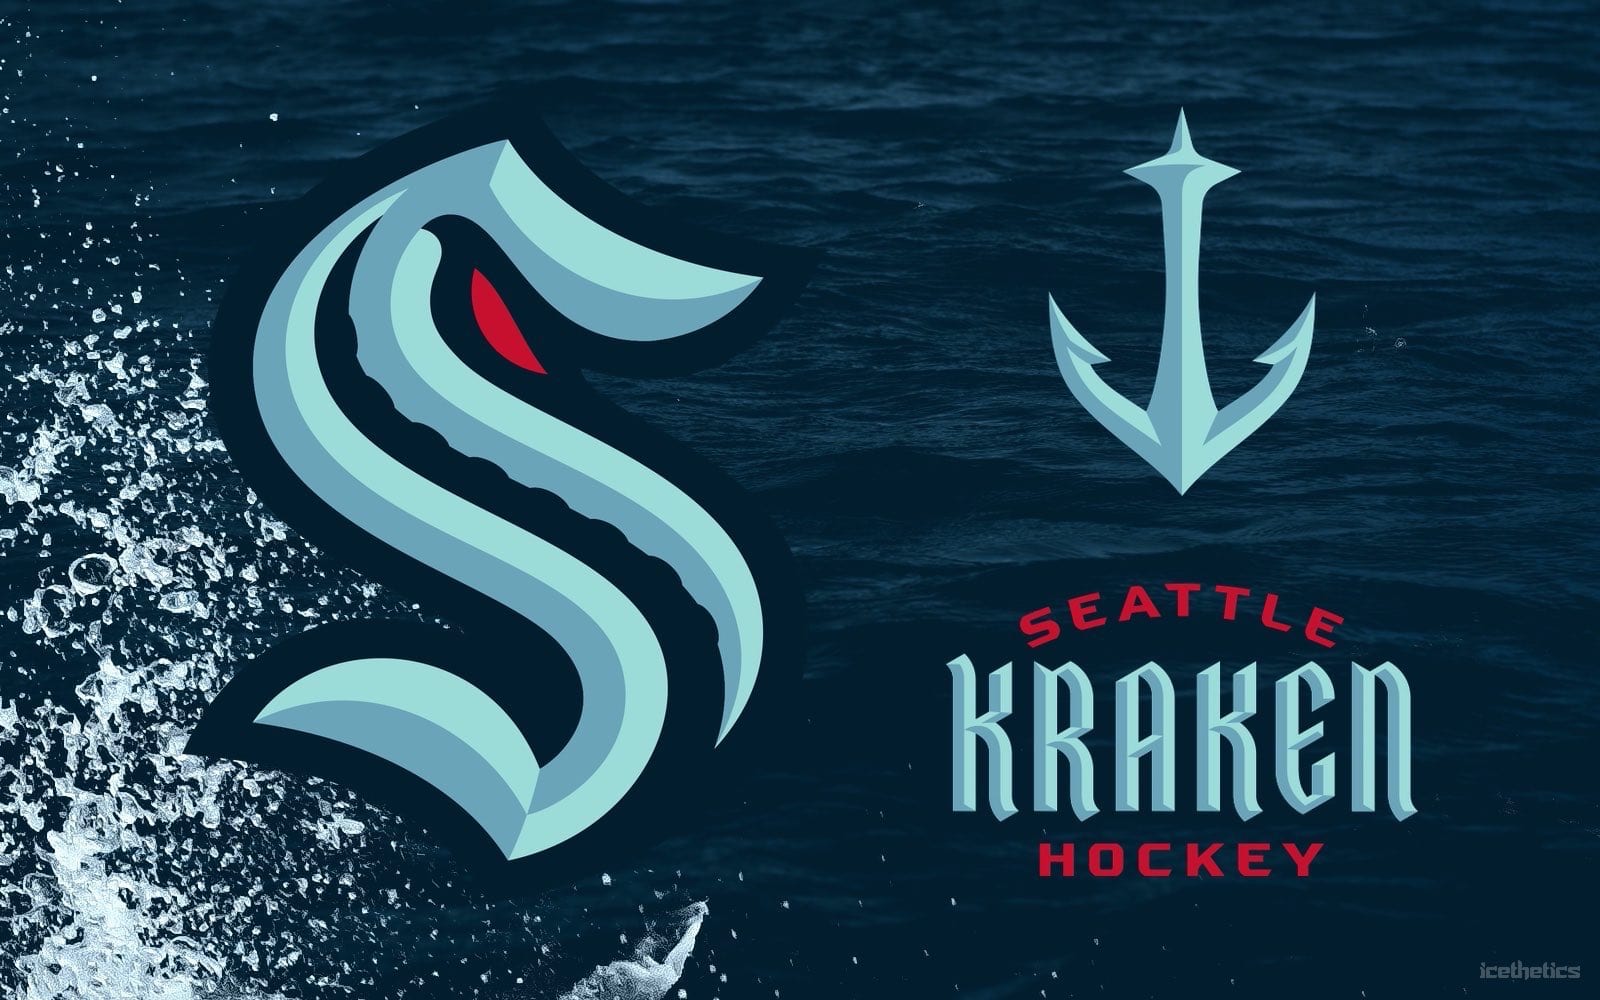 Seattle Announces New NHL Team Name… The Seattle Kraken